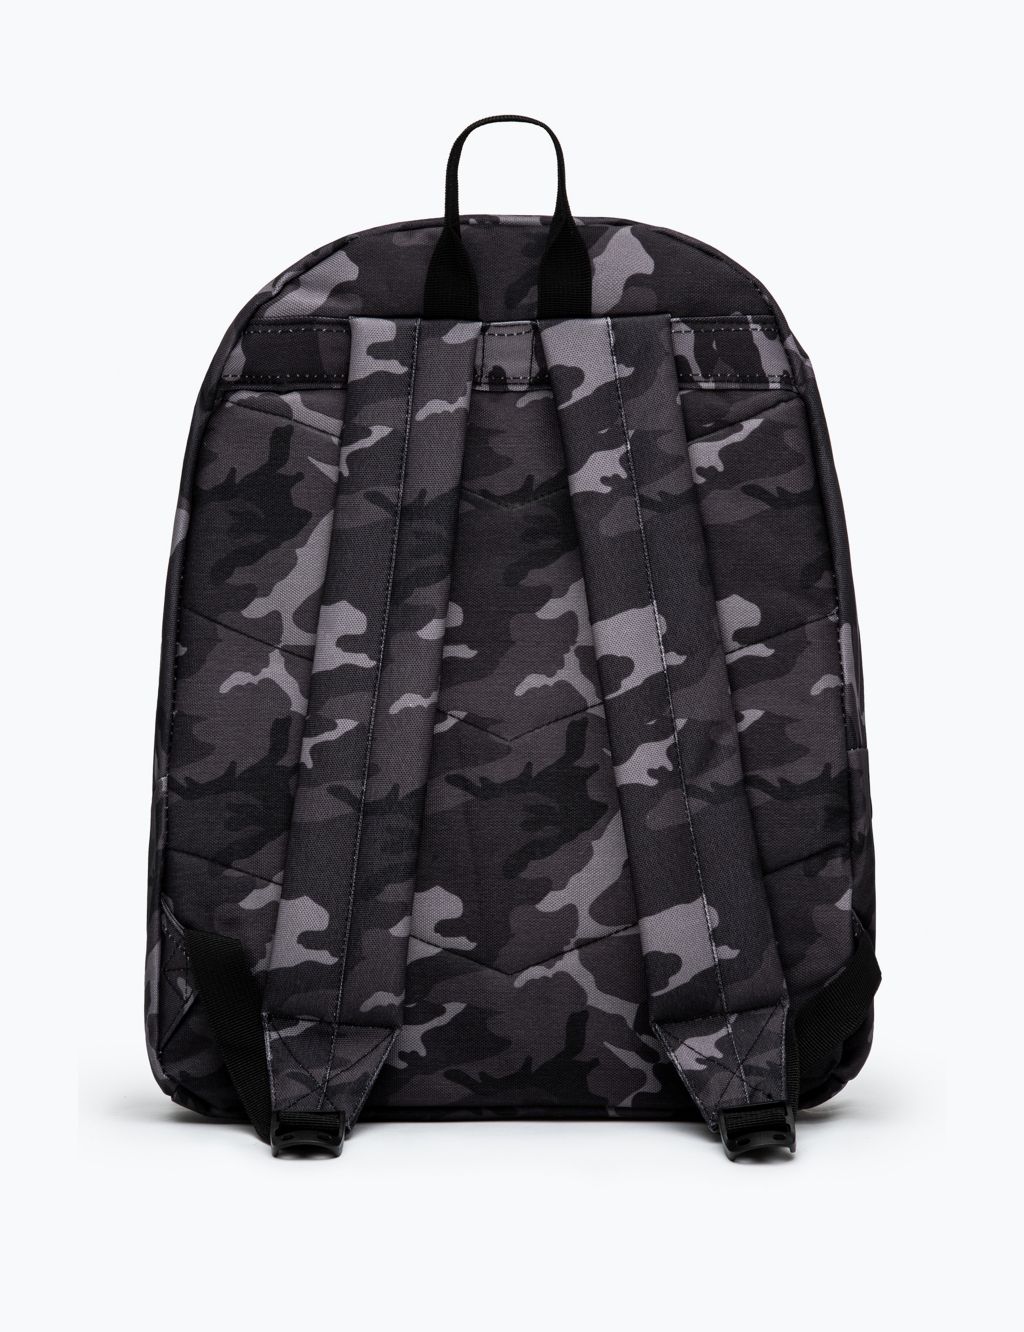 Kids' Camouflage Print Backpack image 3